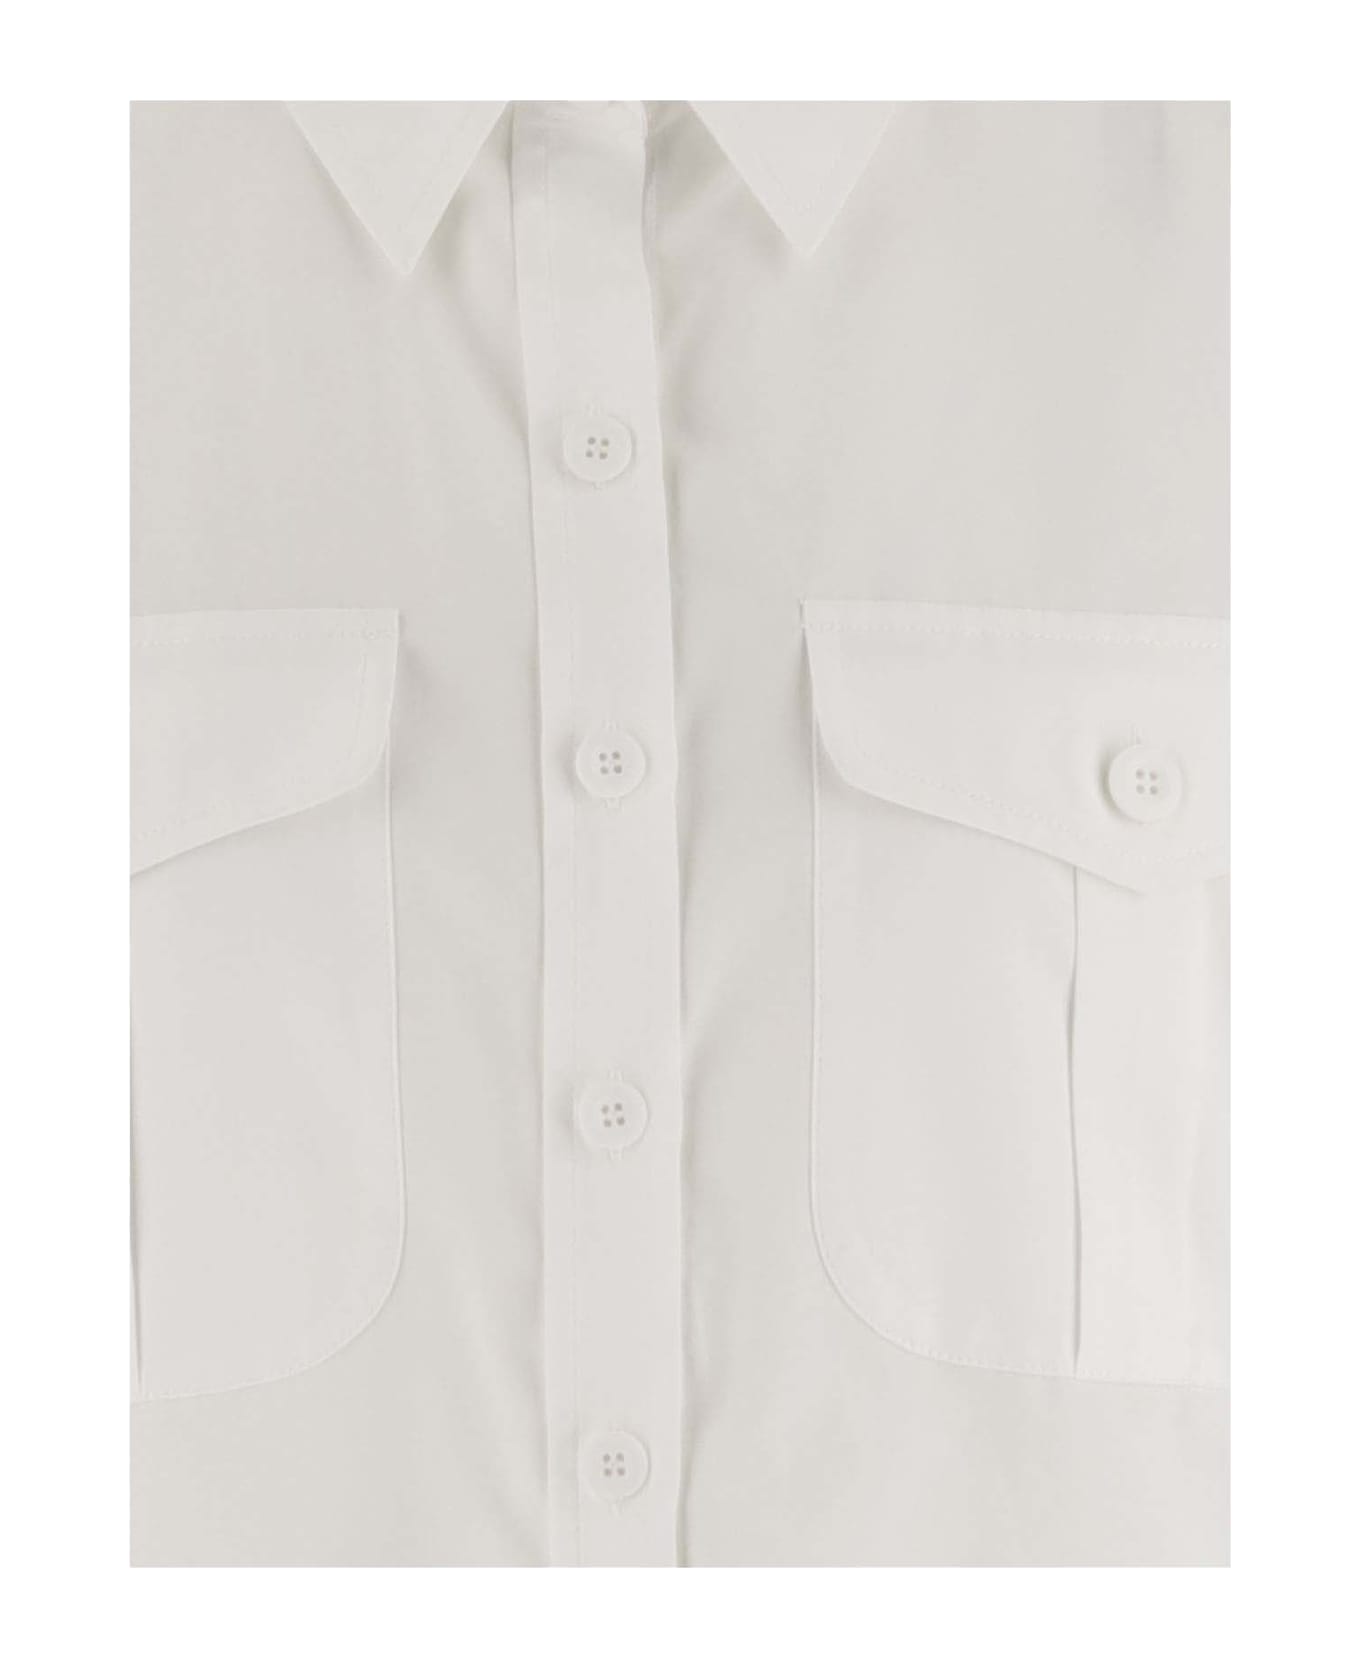 Aspesi Cotton Shirt - White